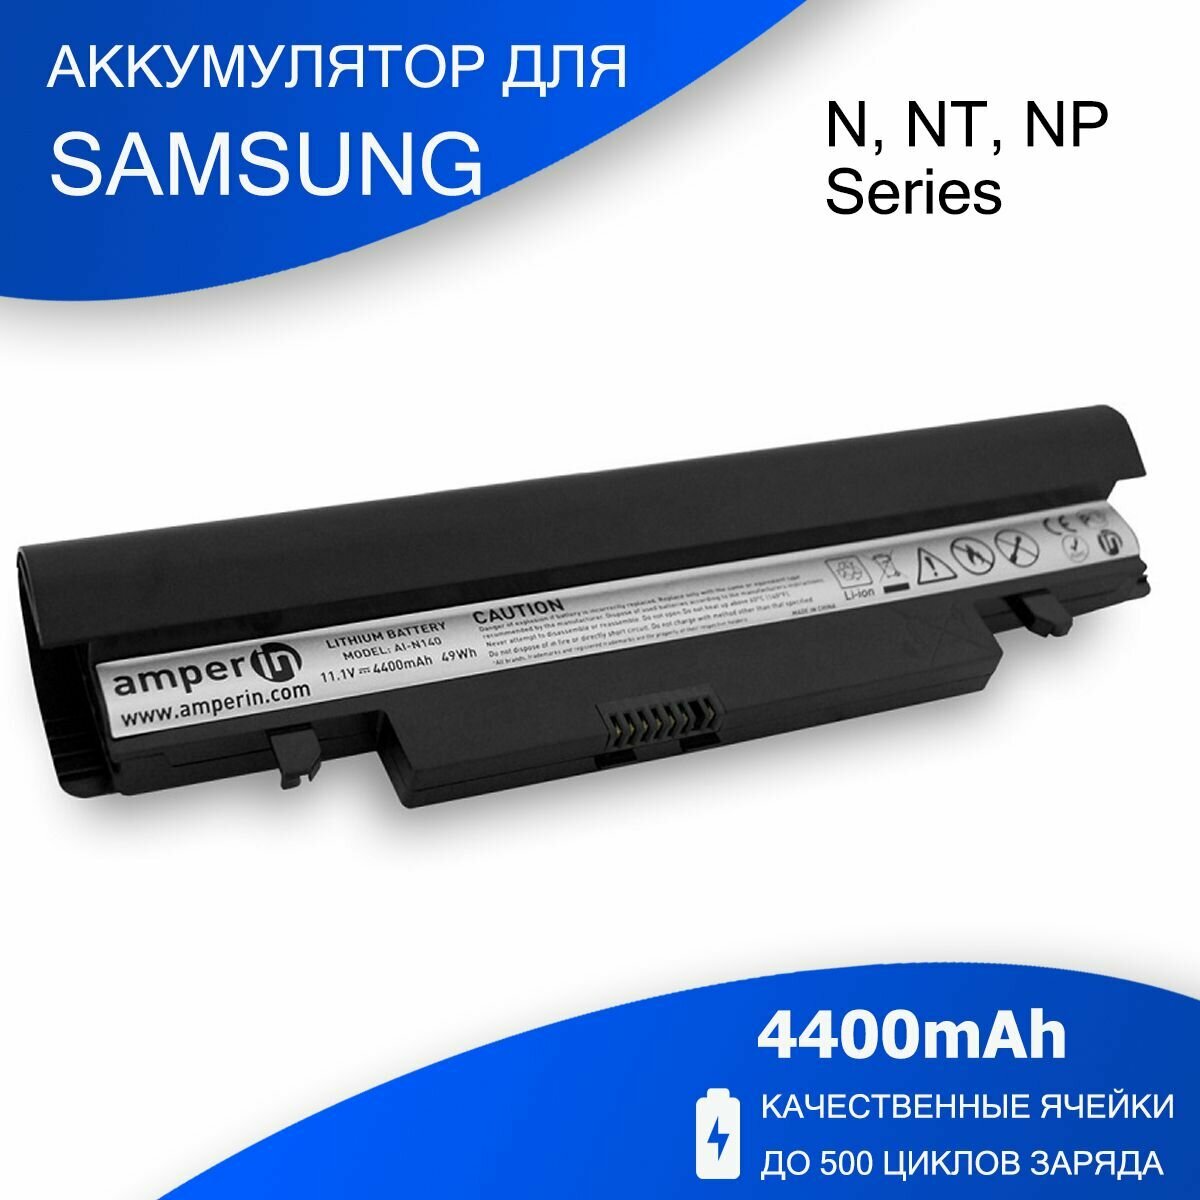 Аккумулятор Amperin для Samsung N NT NP Series 11.1V 4400mAh (49Wh) AI-N140